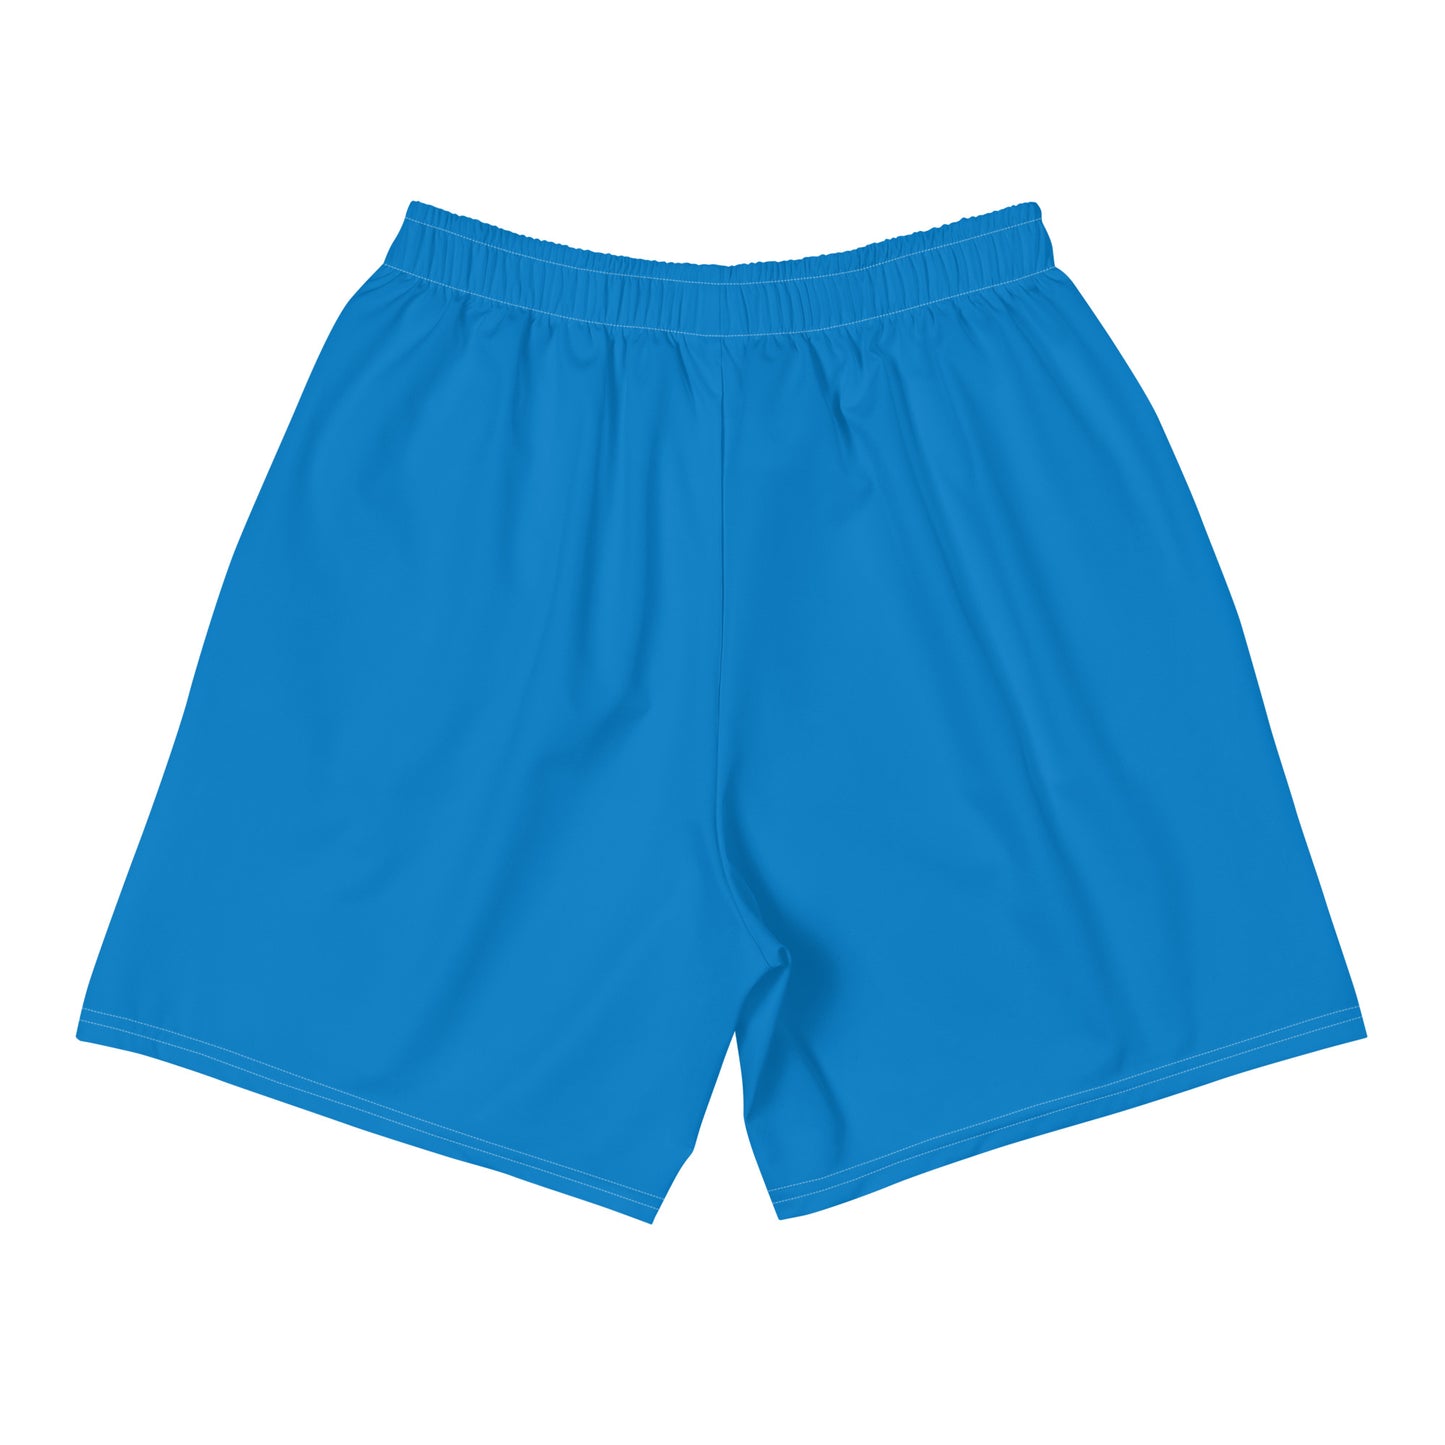 Blue NBH Men's  Shorts